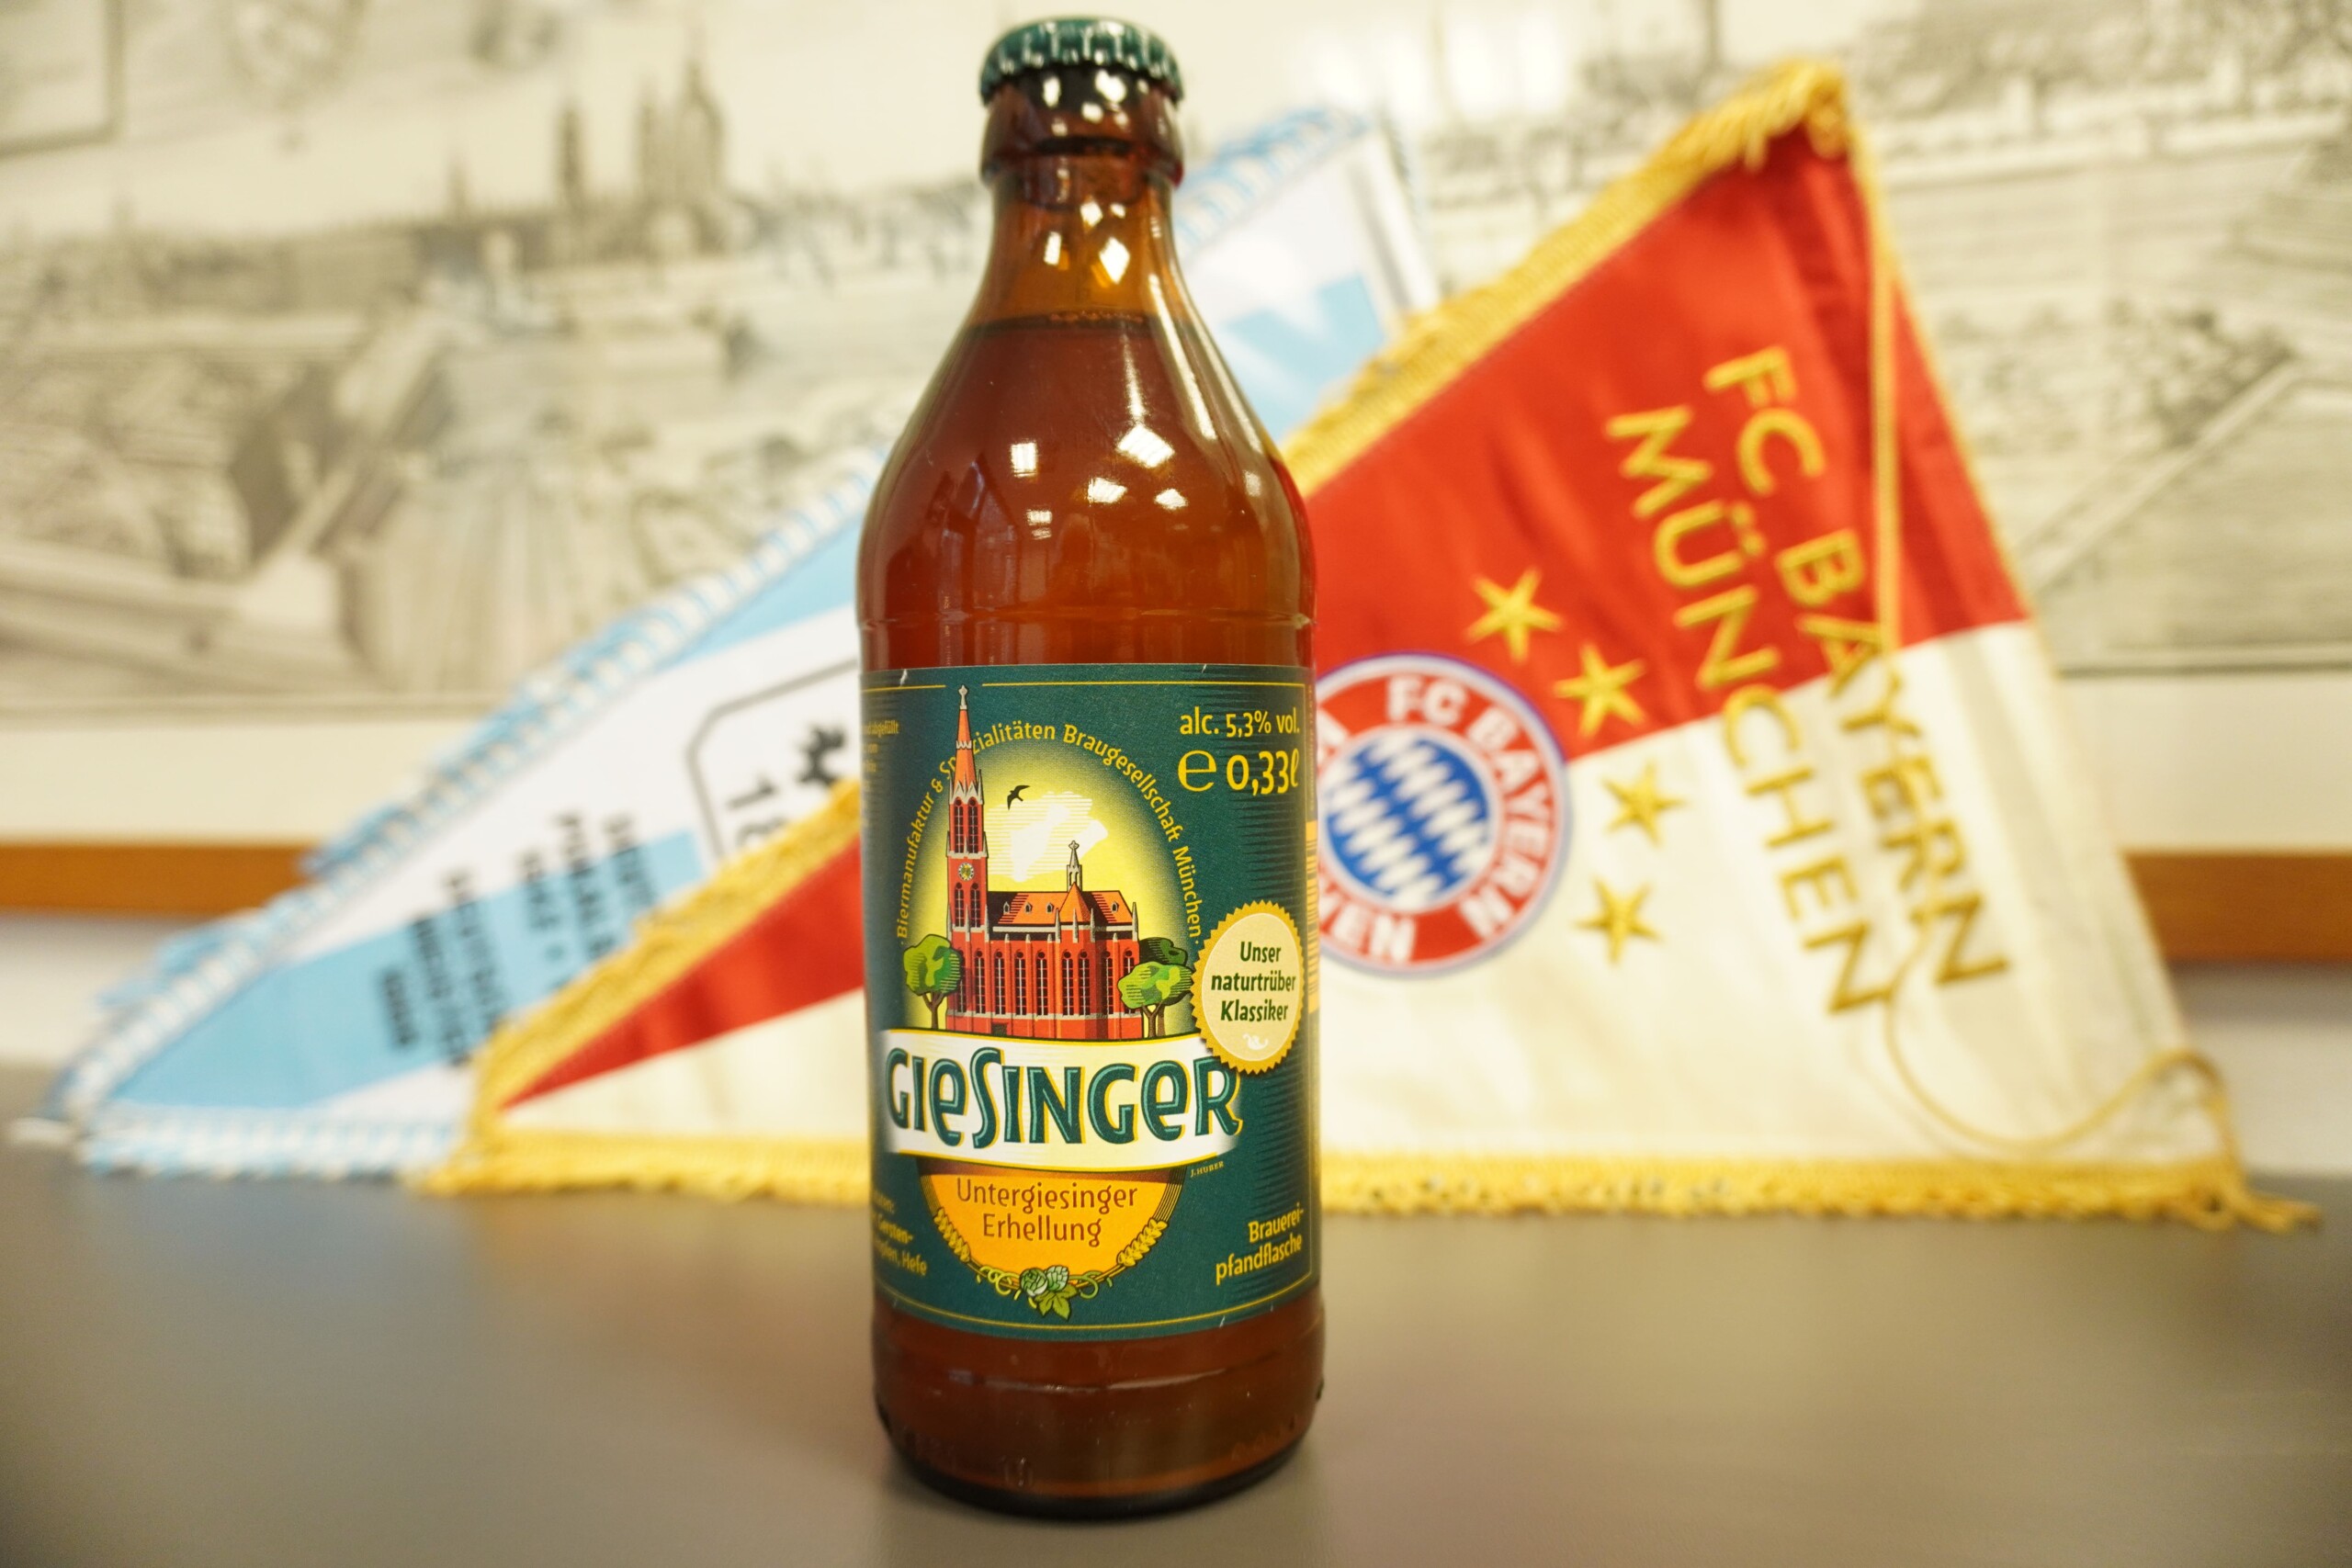 A Giesinger beer